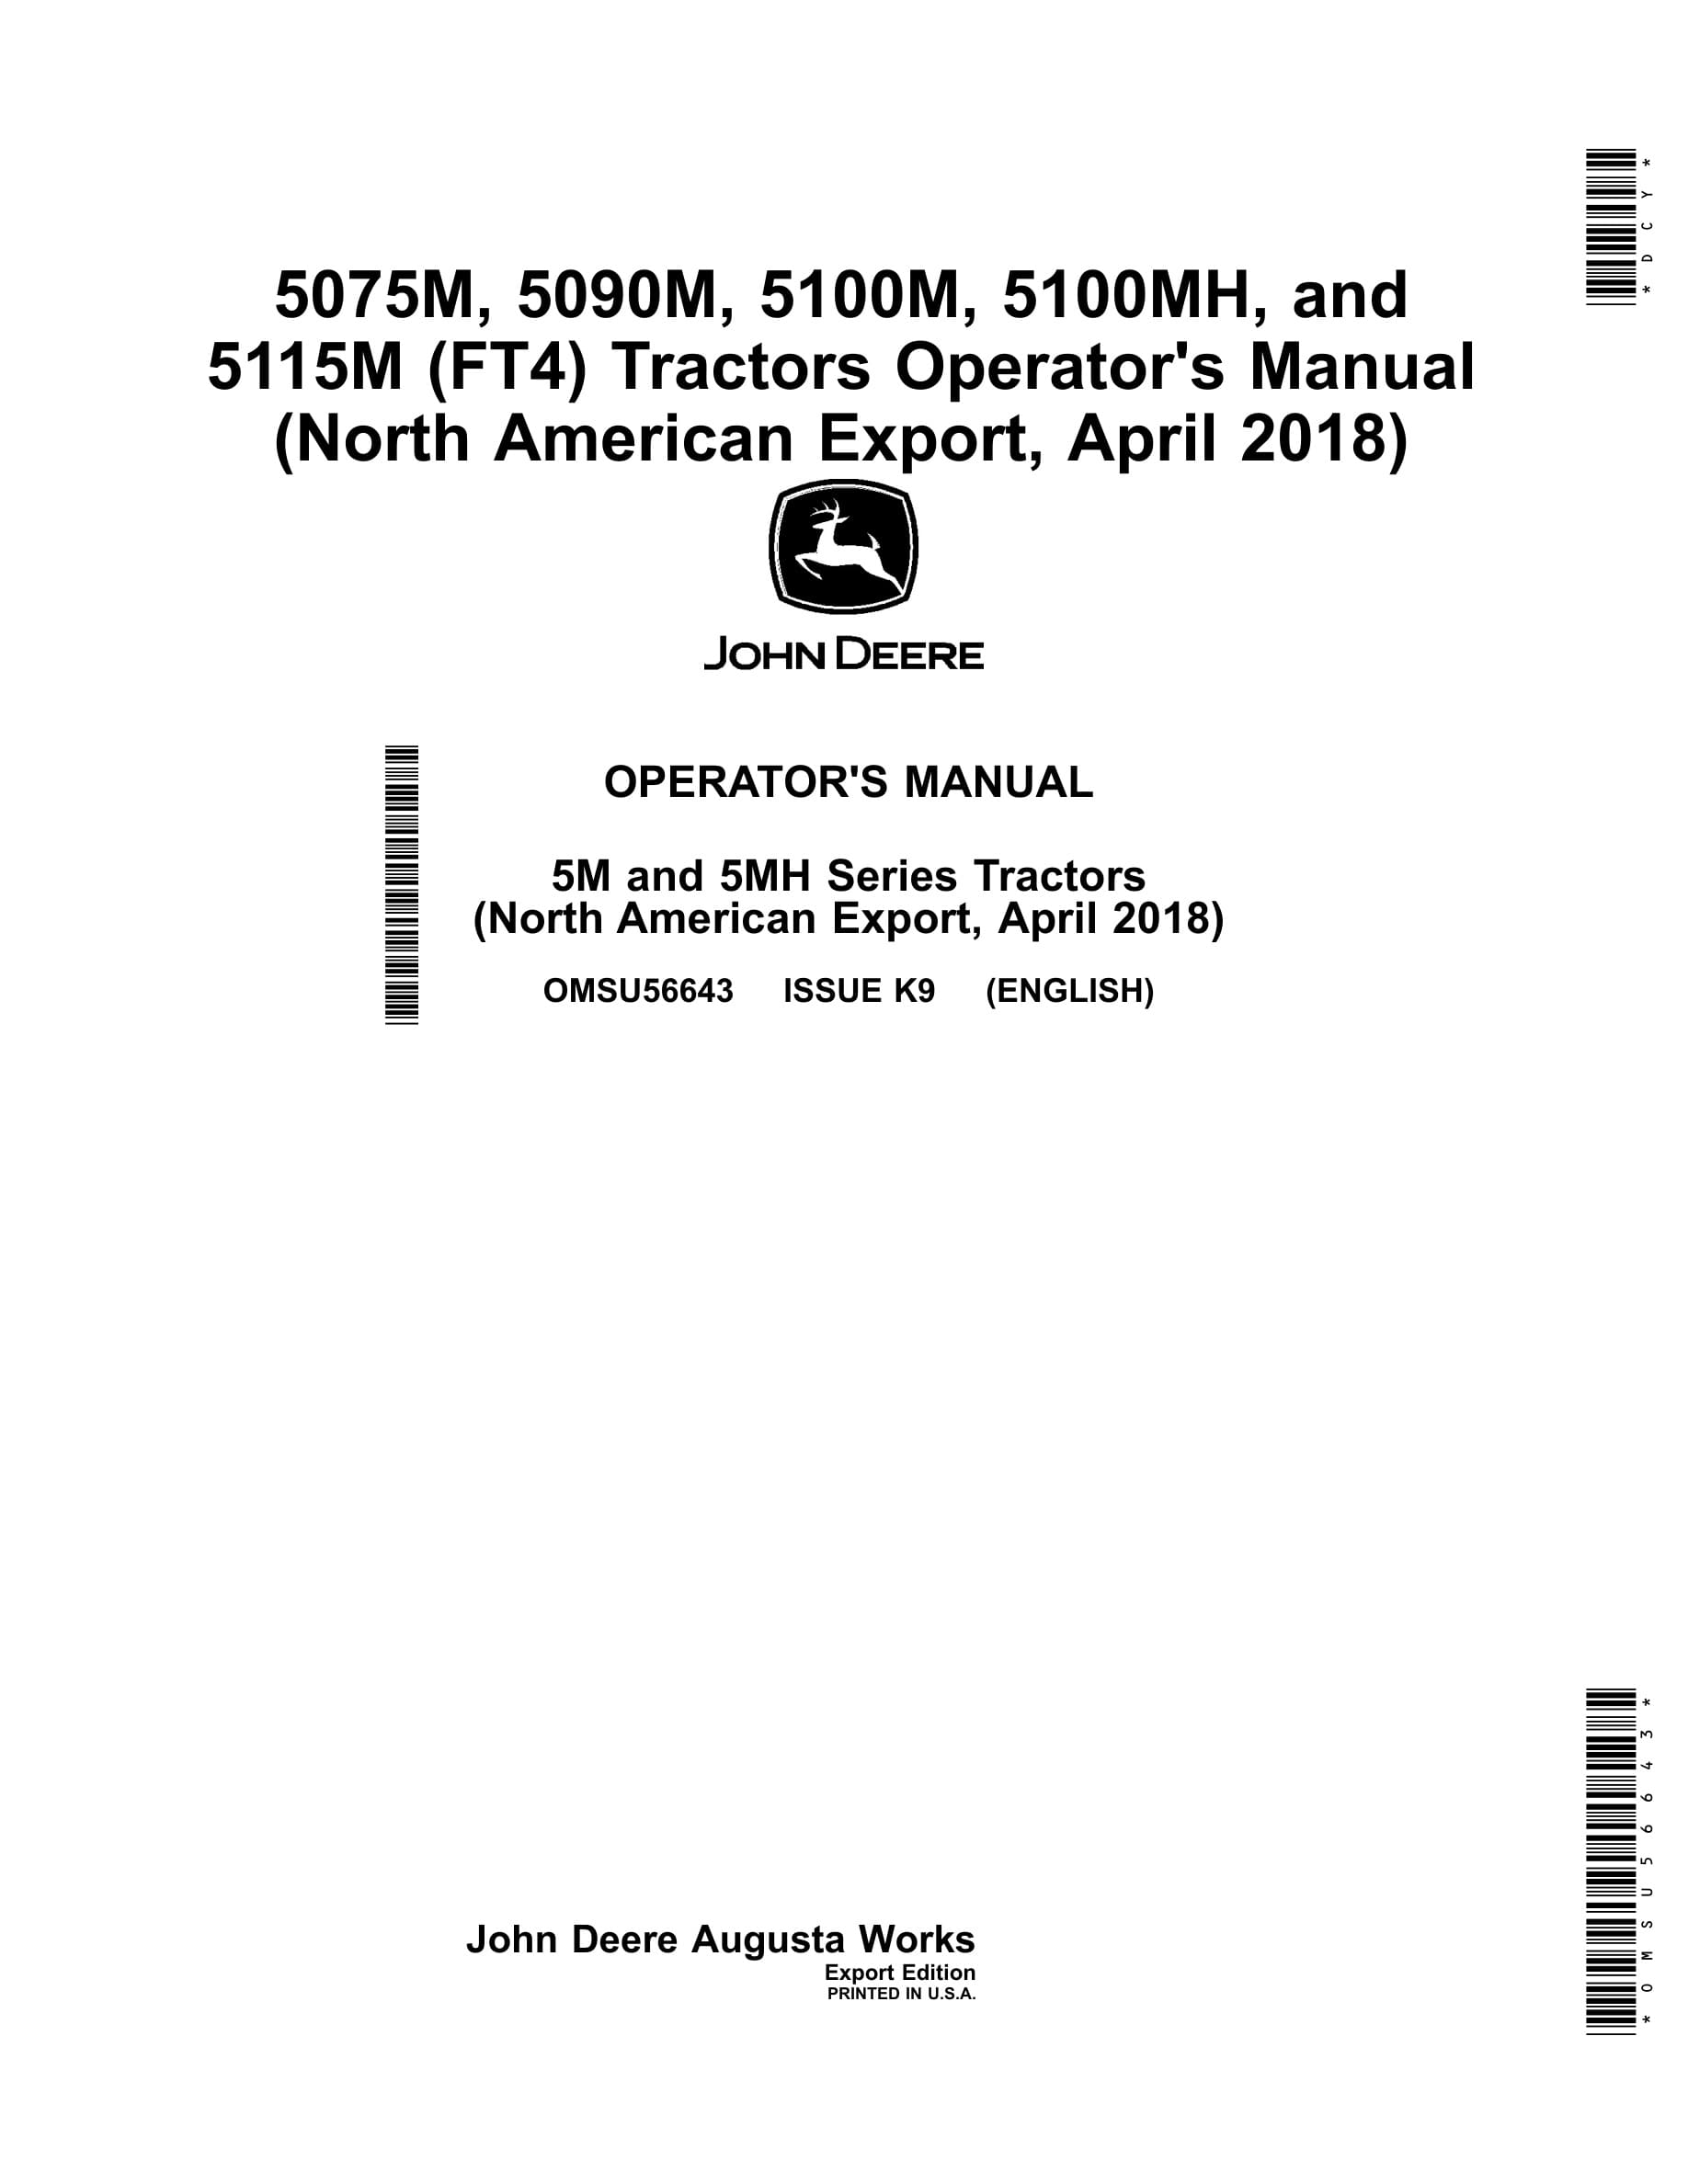 John Deere 5075m, 5090m, 5100m, 5100mh, And 5115m (ft4) Tractors Operator Manuals OMSU56643-1